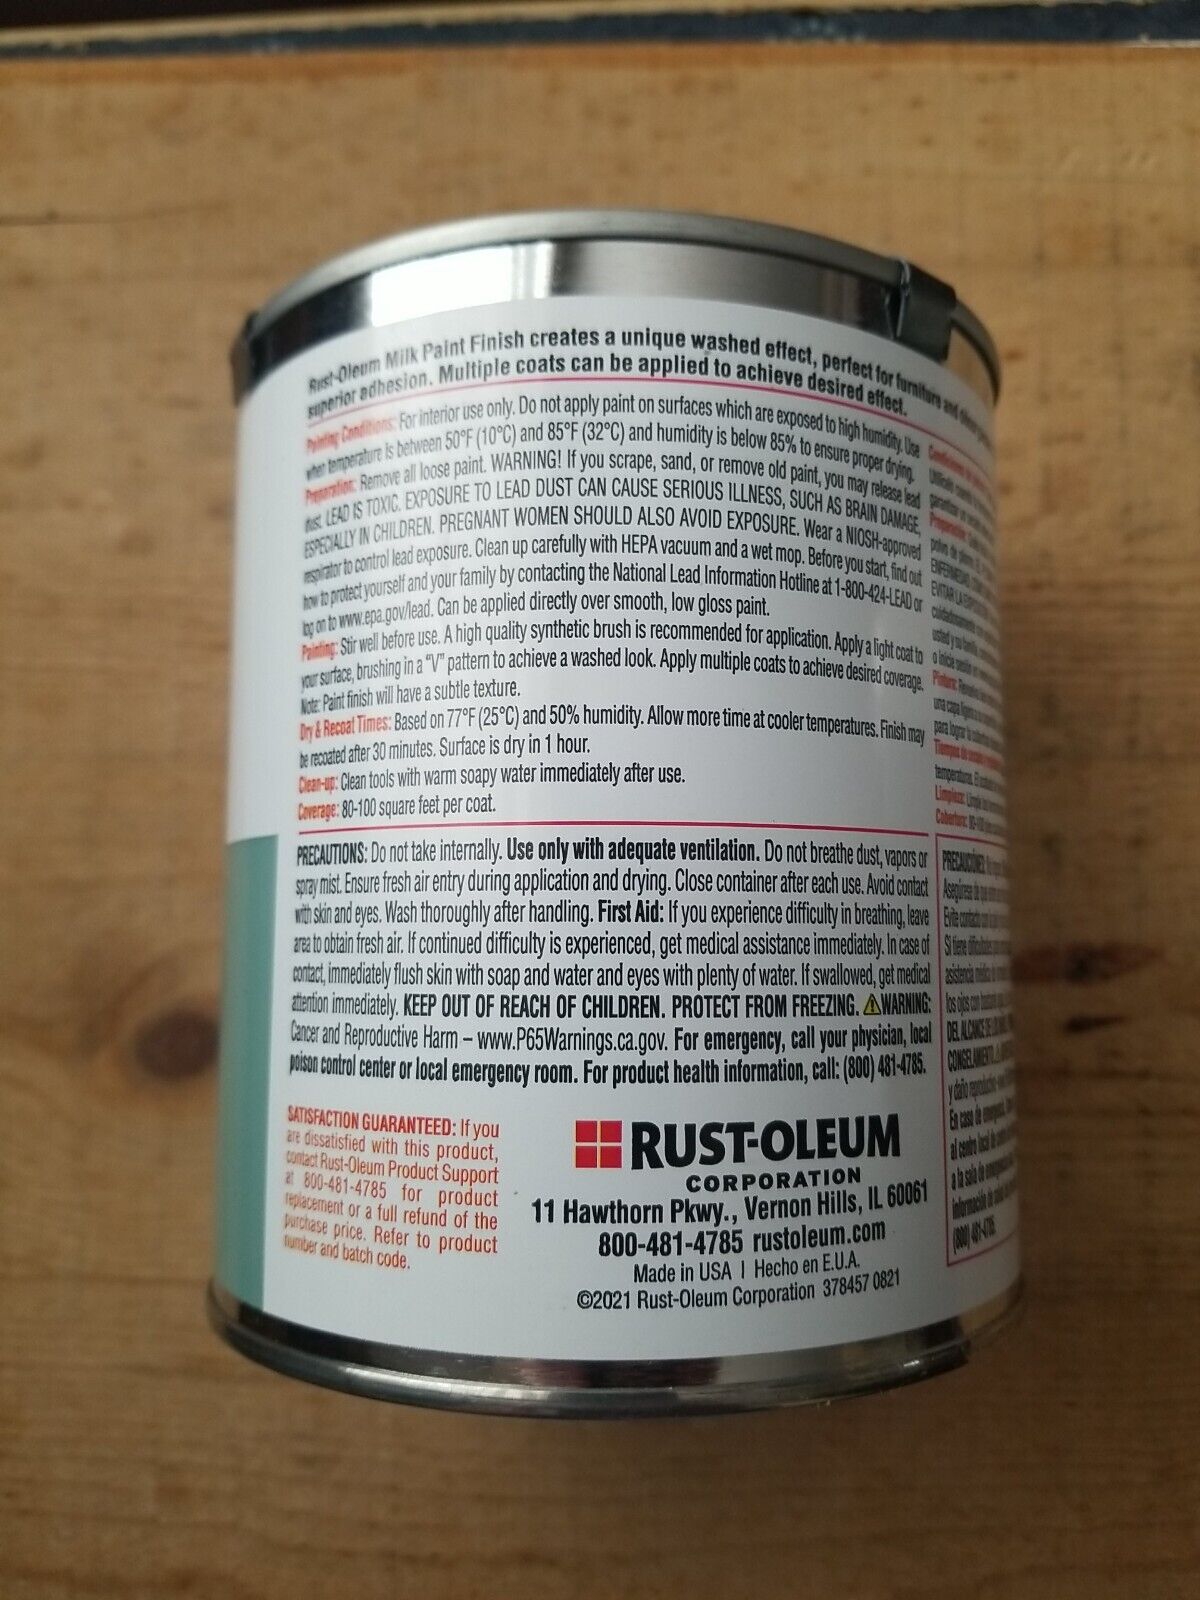 Rust-Oleum 331050 Milk Paint Finish, Quart, Highland Blue 32 Fl Oz (Pack of  1) 